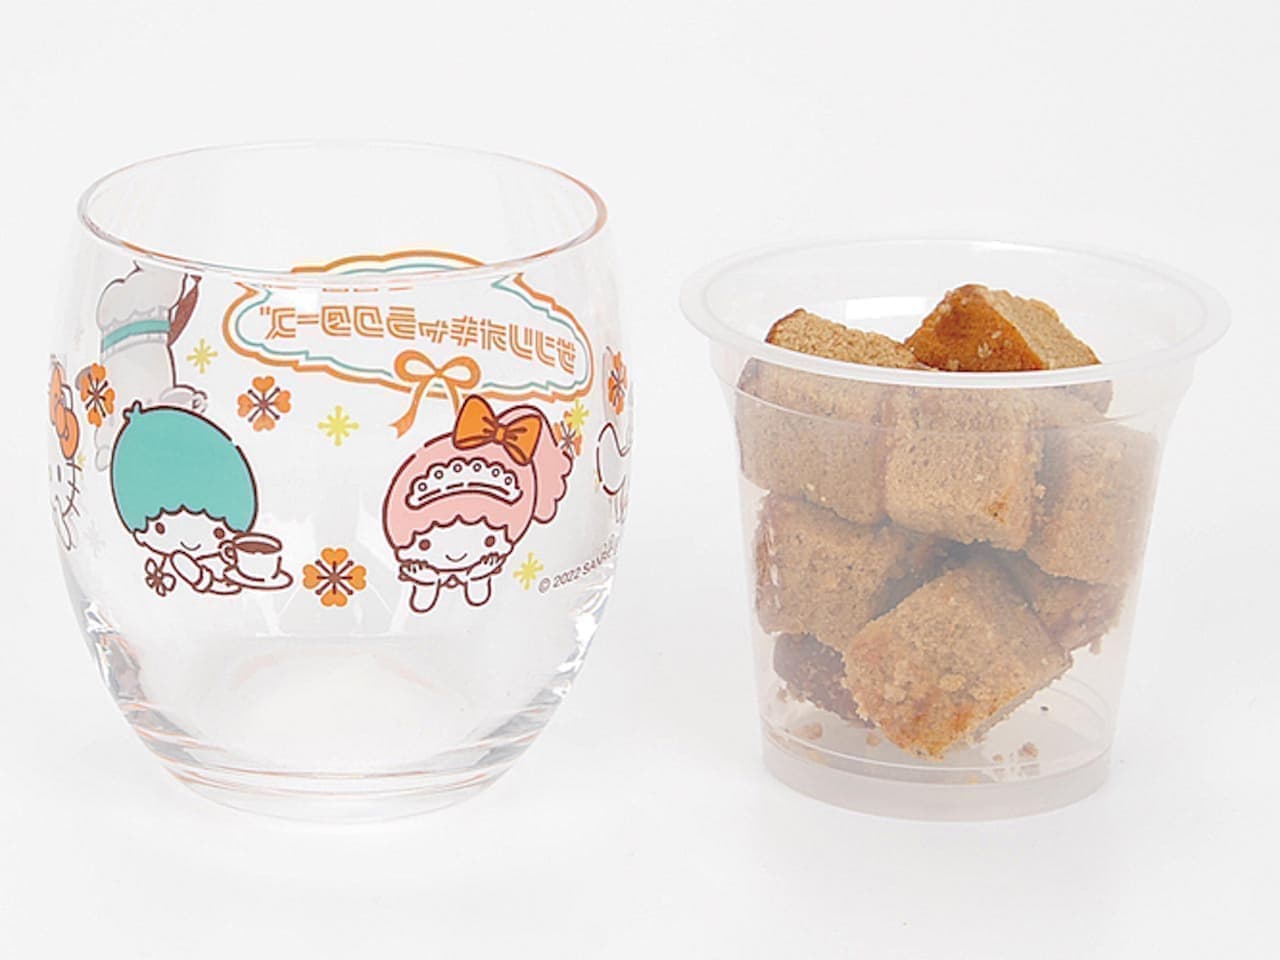 Ministop "Sanrio Characters Tea Brownie" and "Sanrio Characters Chocolate Brownie